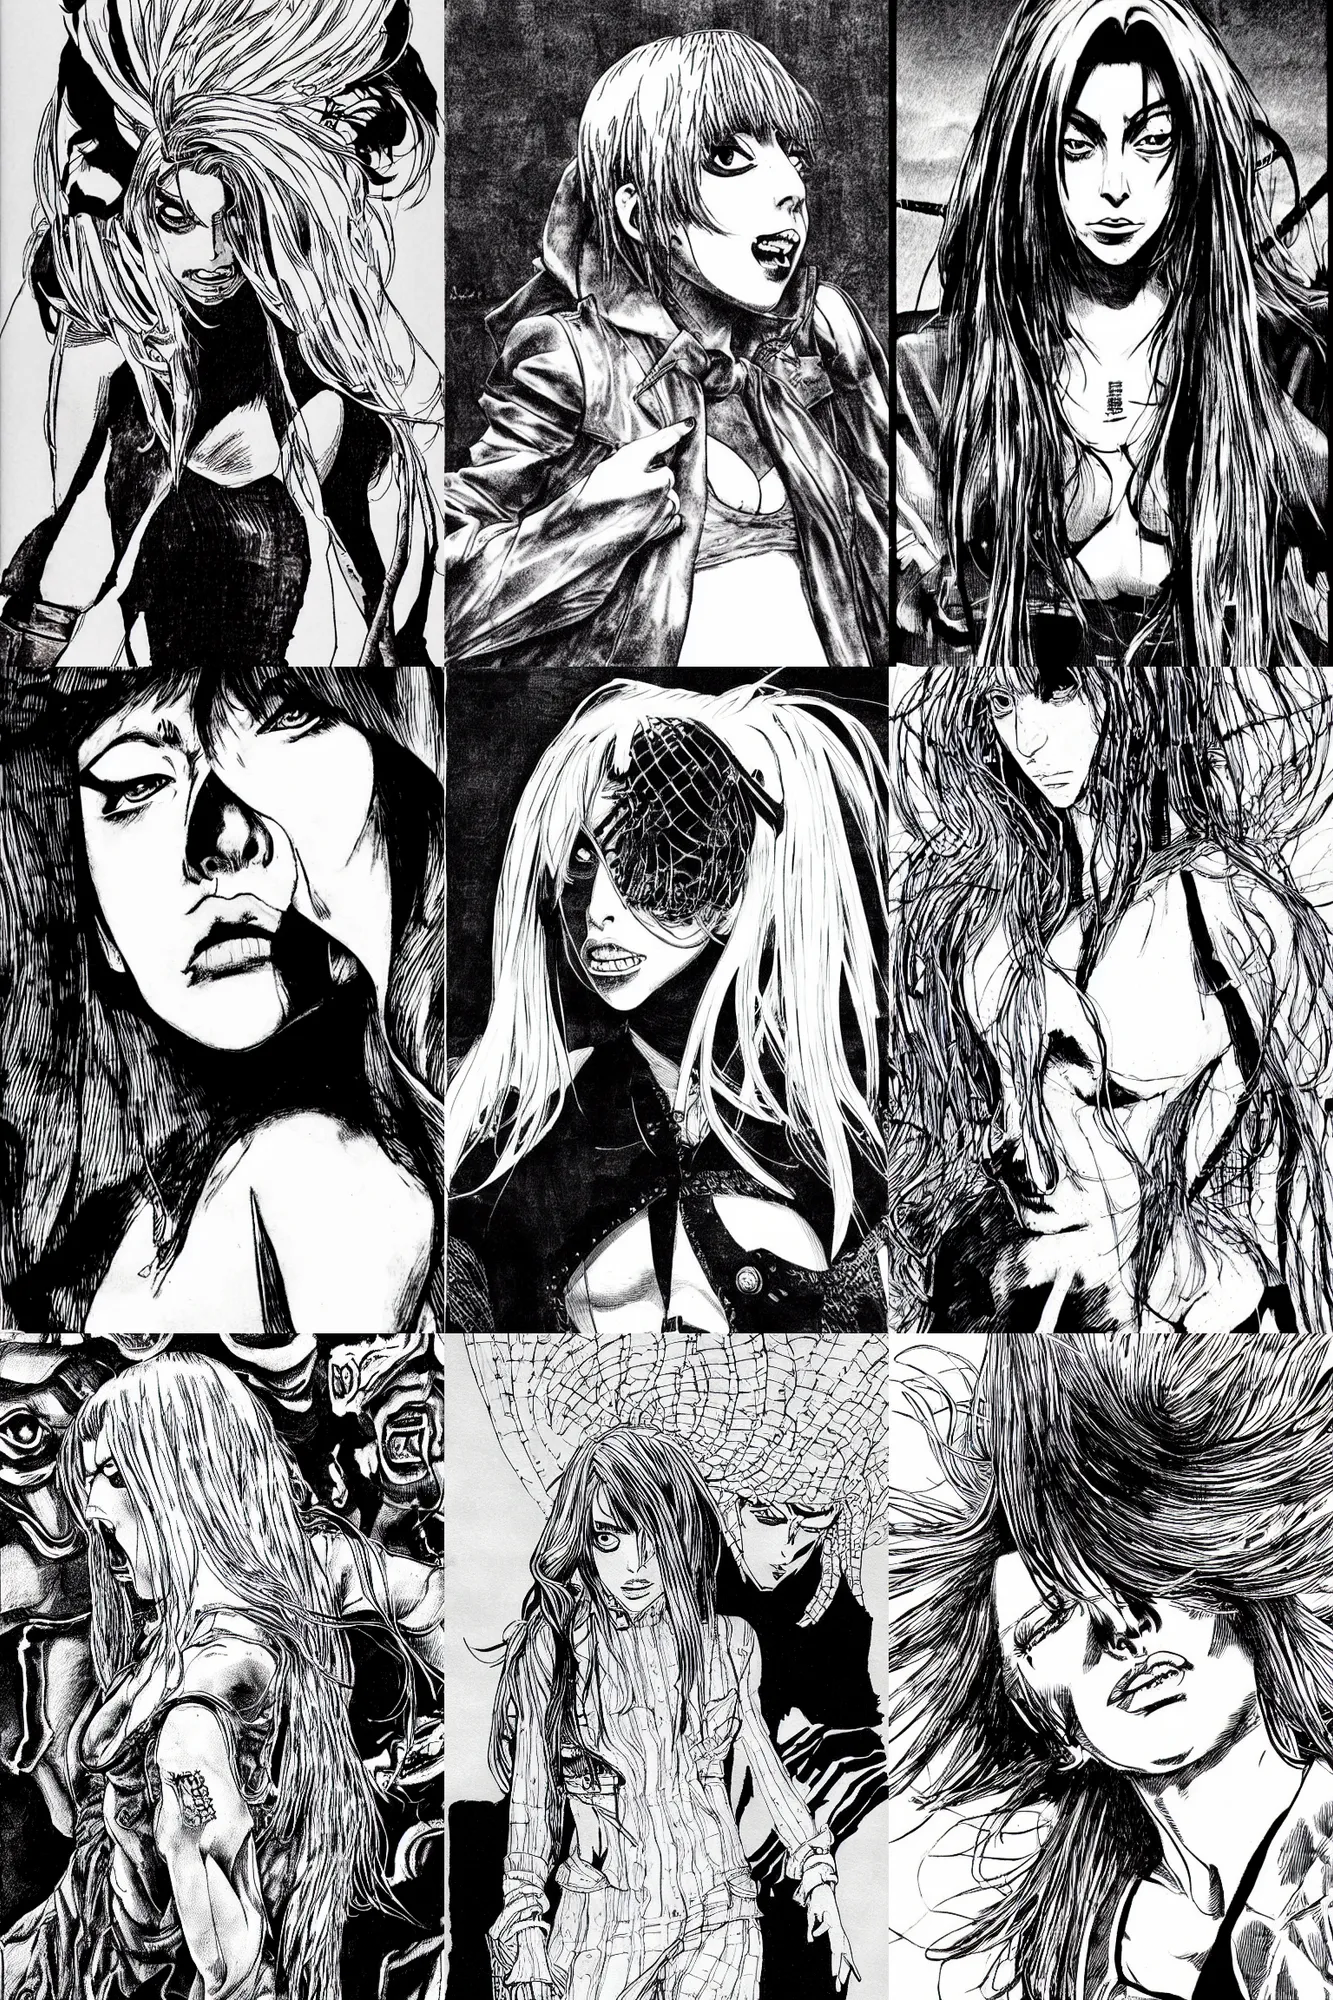 Prompt: detailed lady gaga similing in vagabond manga by takehiko inoue, black ink